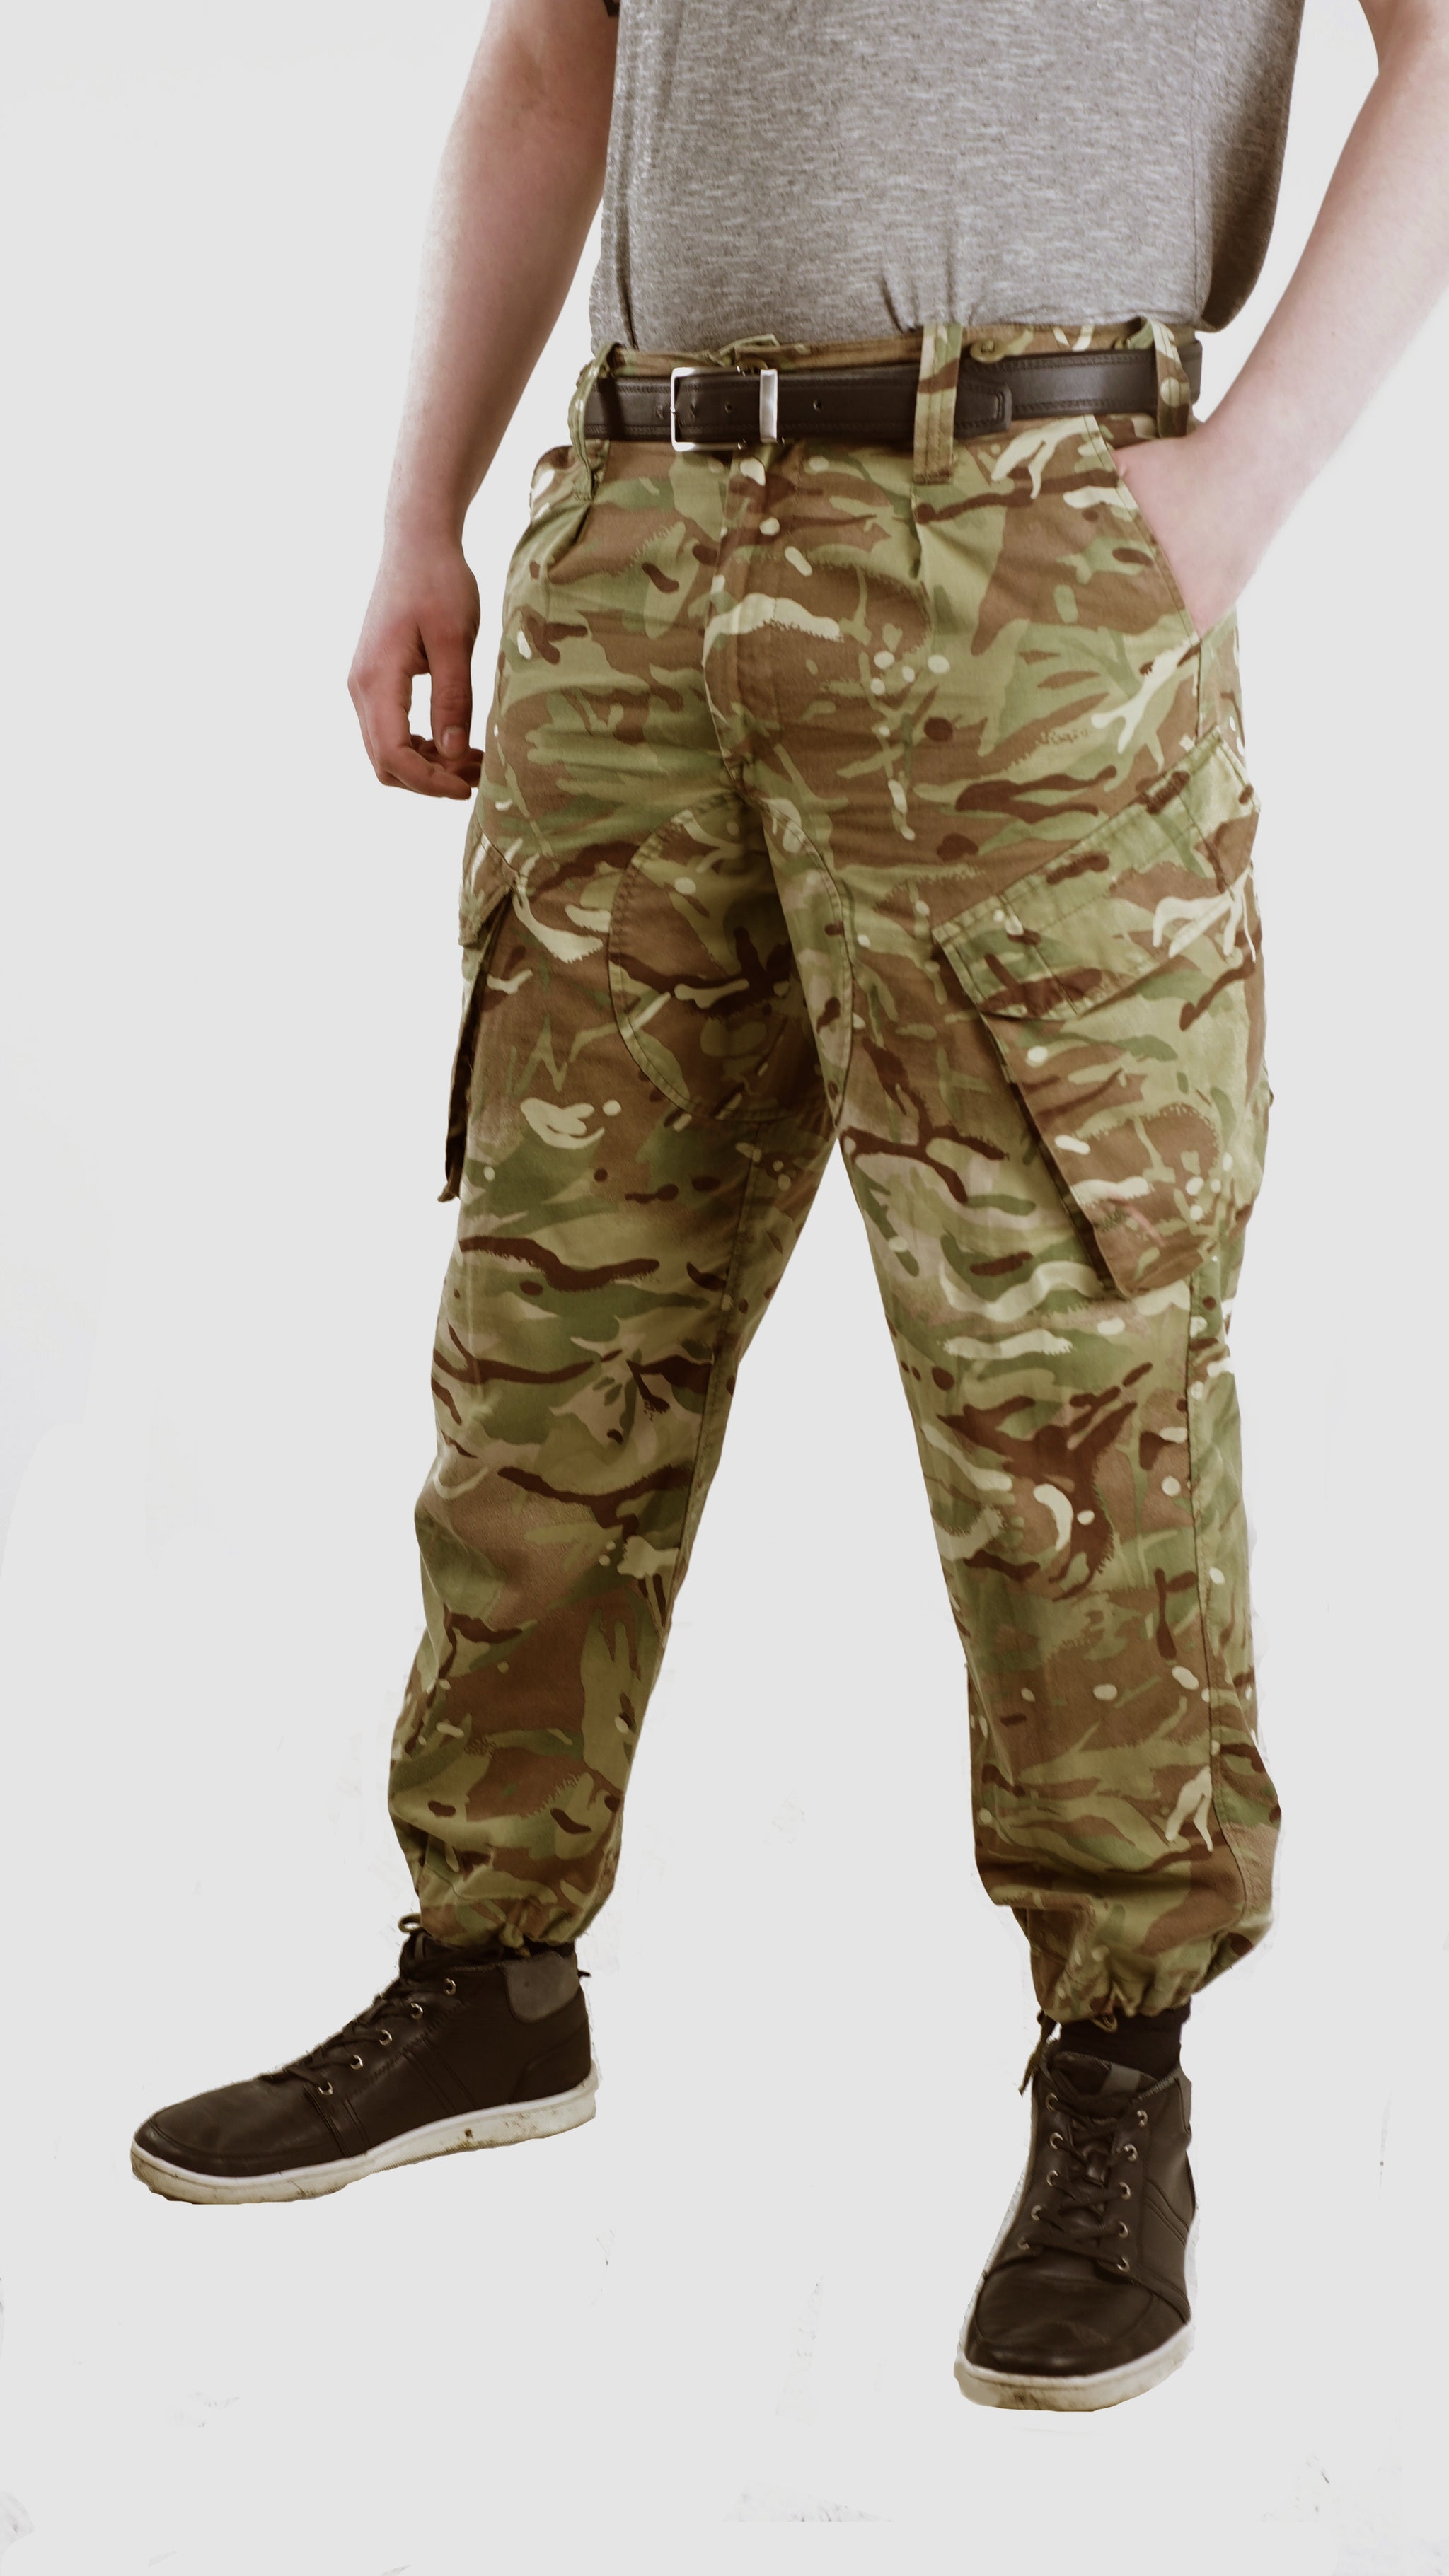 BRITISH COMBAT TROUSERS TEMPORATE  CAMOUFLAGE MTP  USED  Military  Surplus  Used Clothing  Pants  Field Pants Military Surplus  Used  Clothing  Pants  Cold Weather Pants militarysurpluseu 